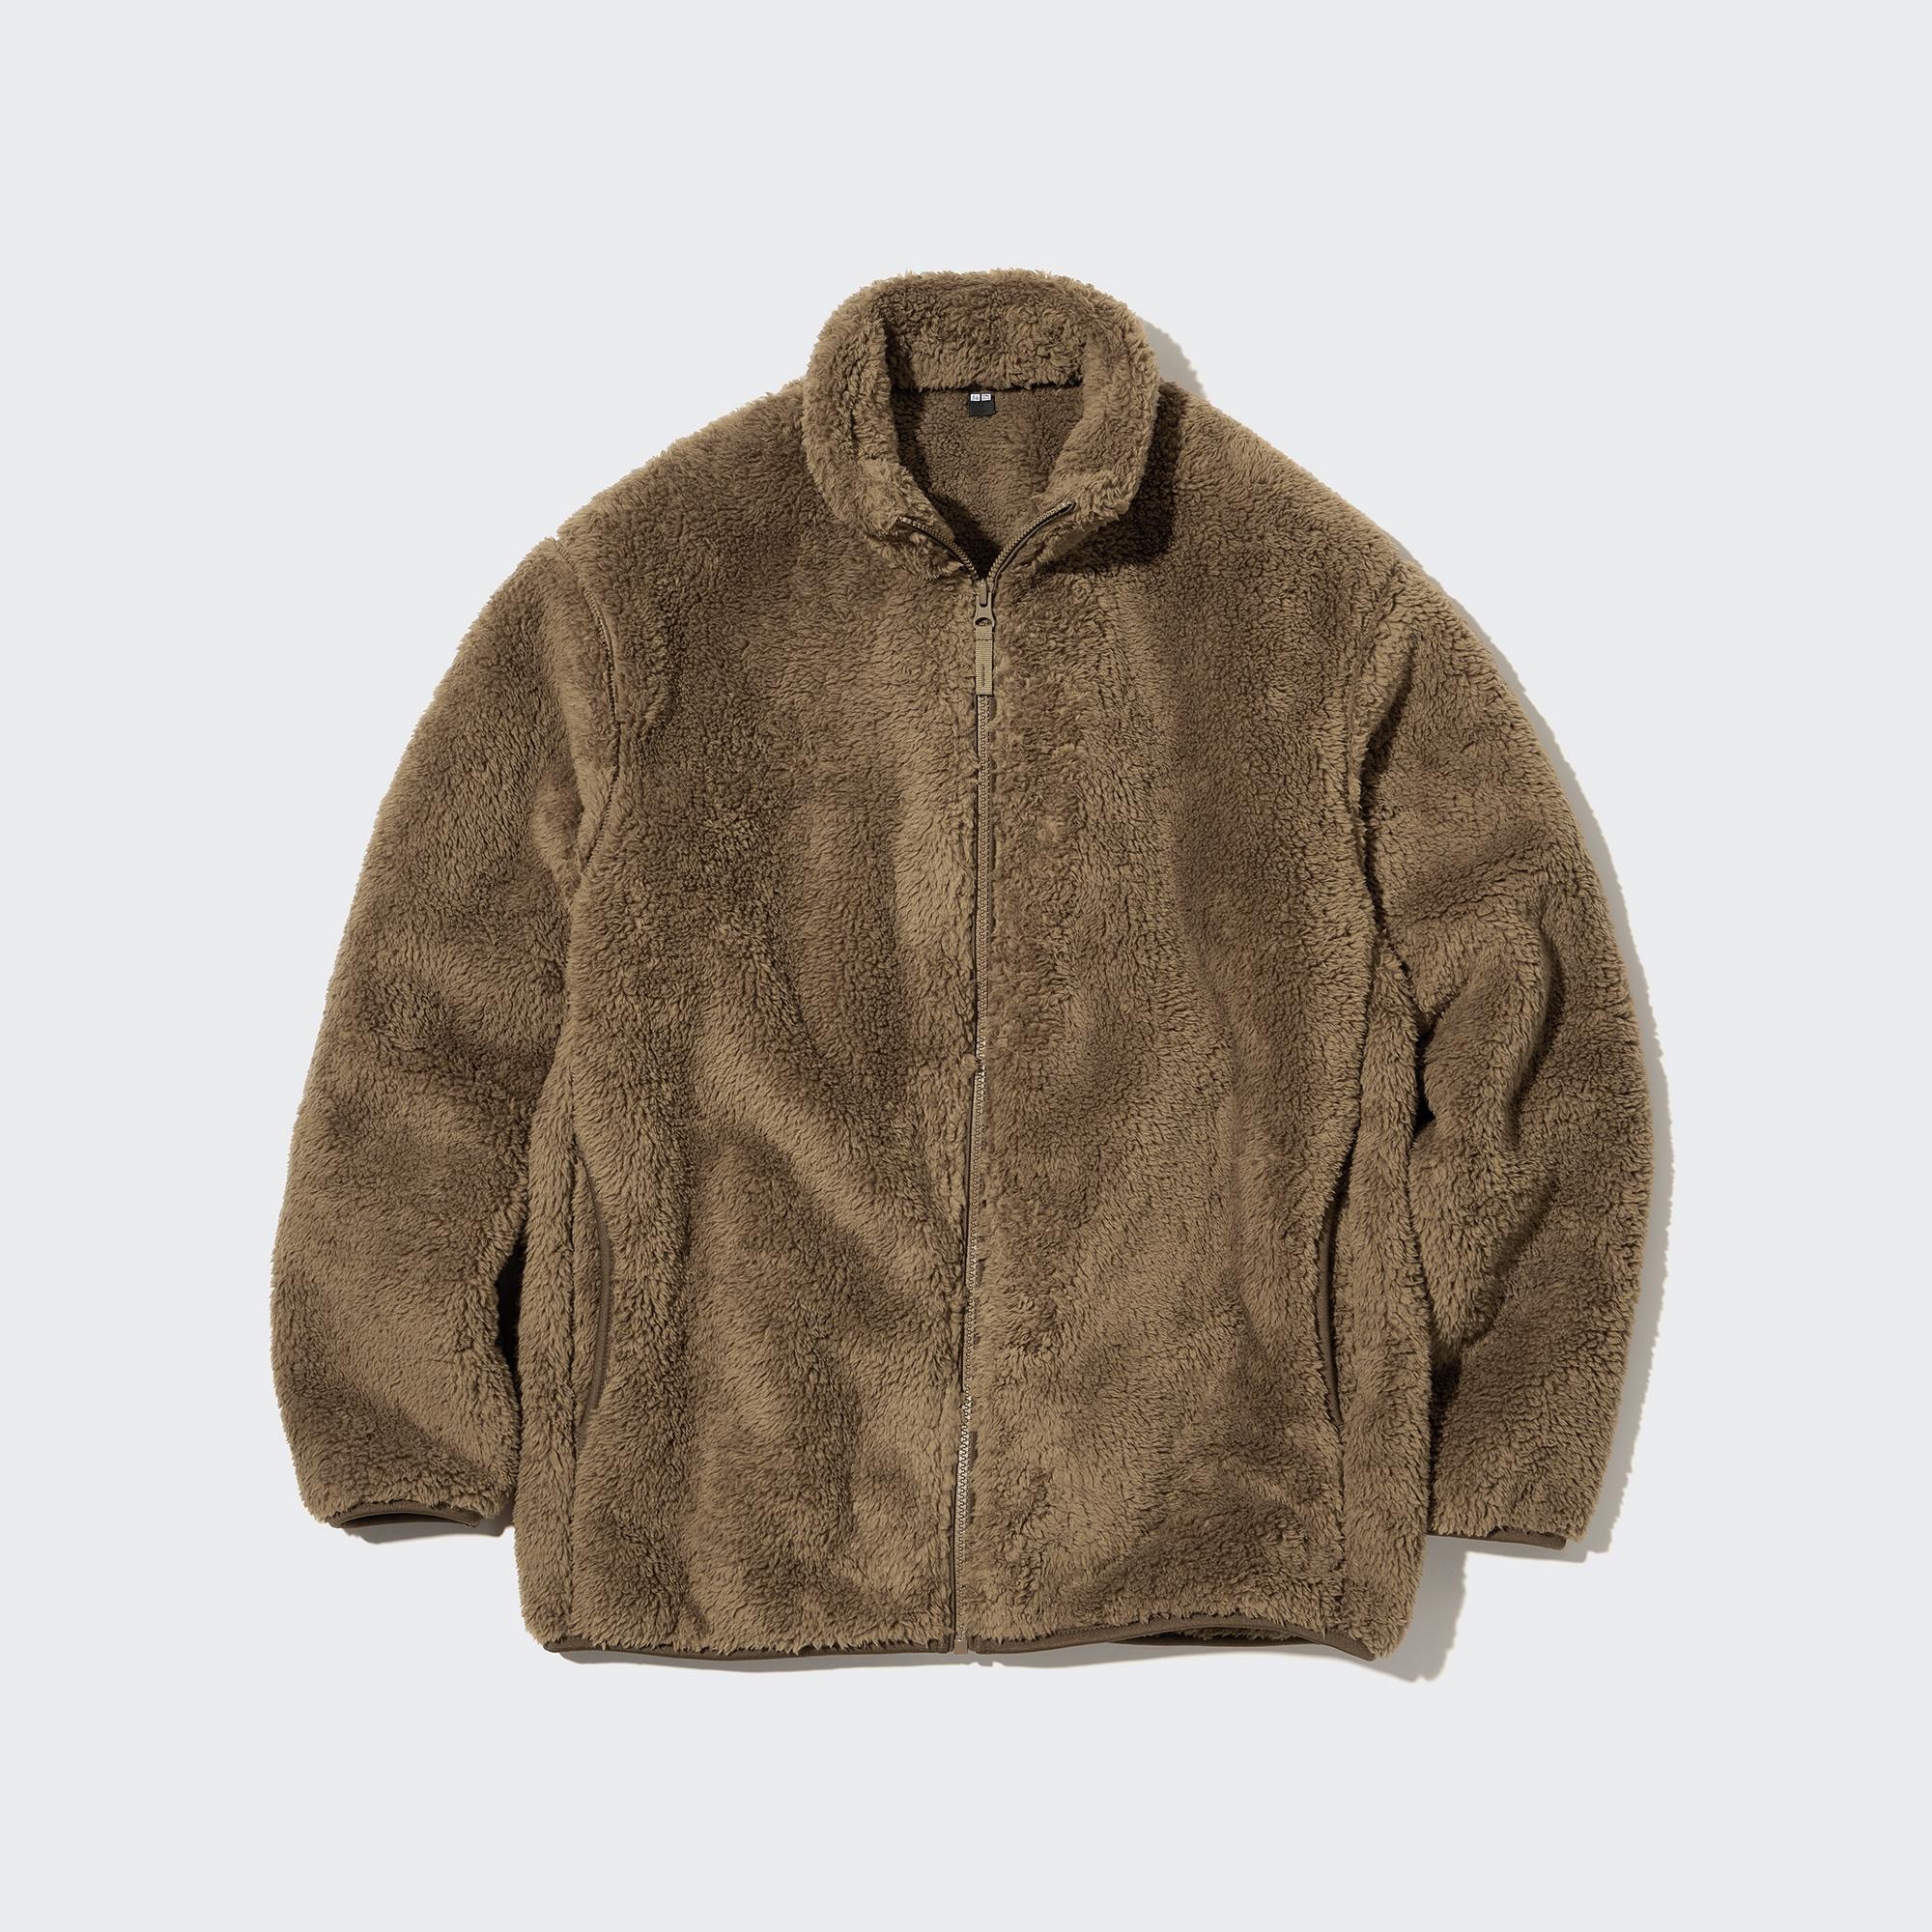 Check styling ideas for「Fluffy Yarn Fleece Full-Zip Jacket